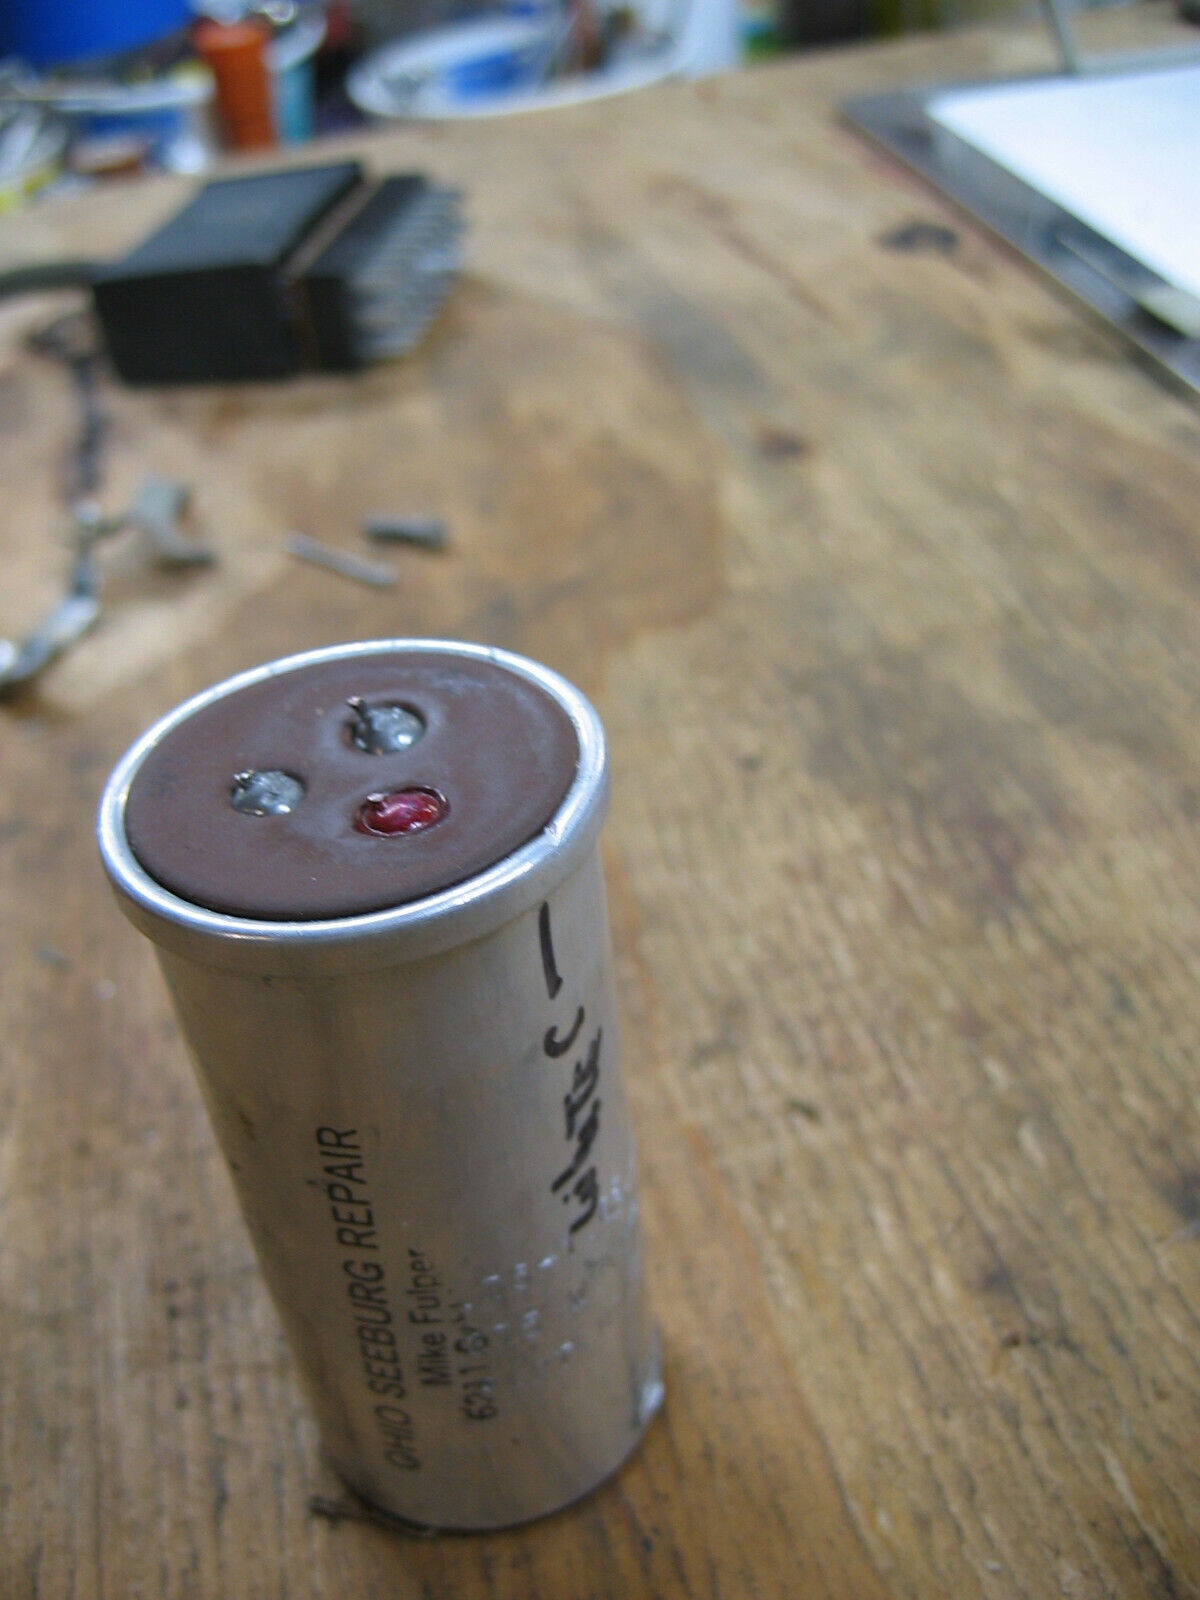 Seeburg motor capacitor tested